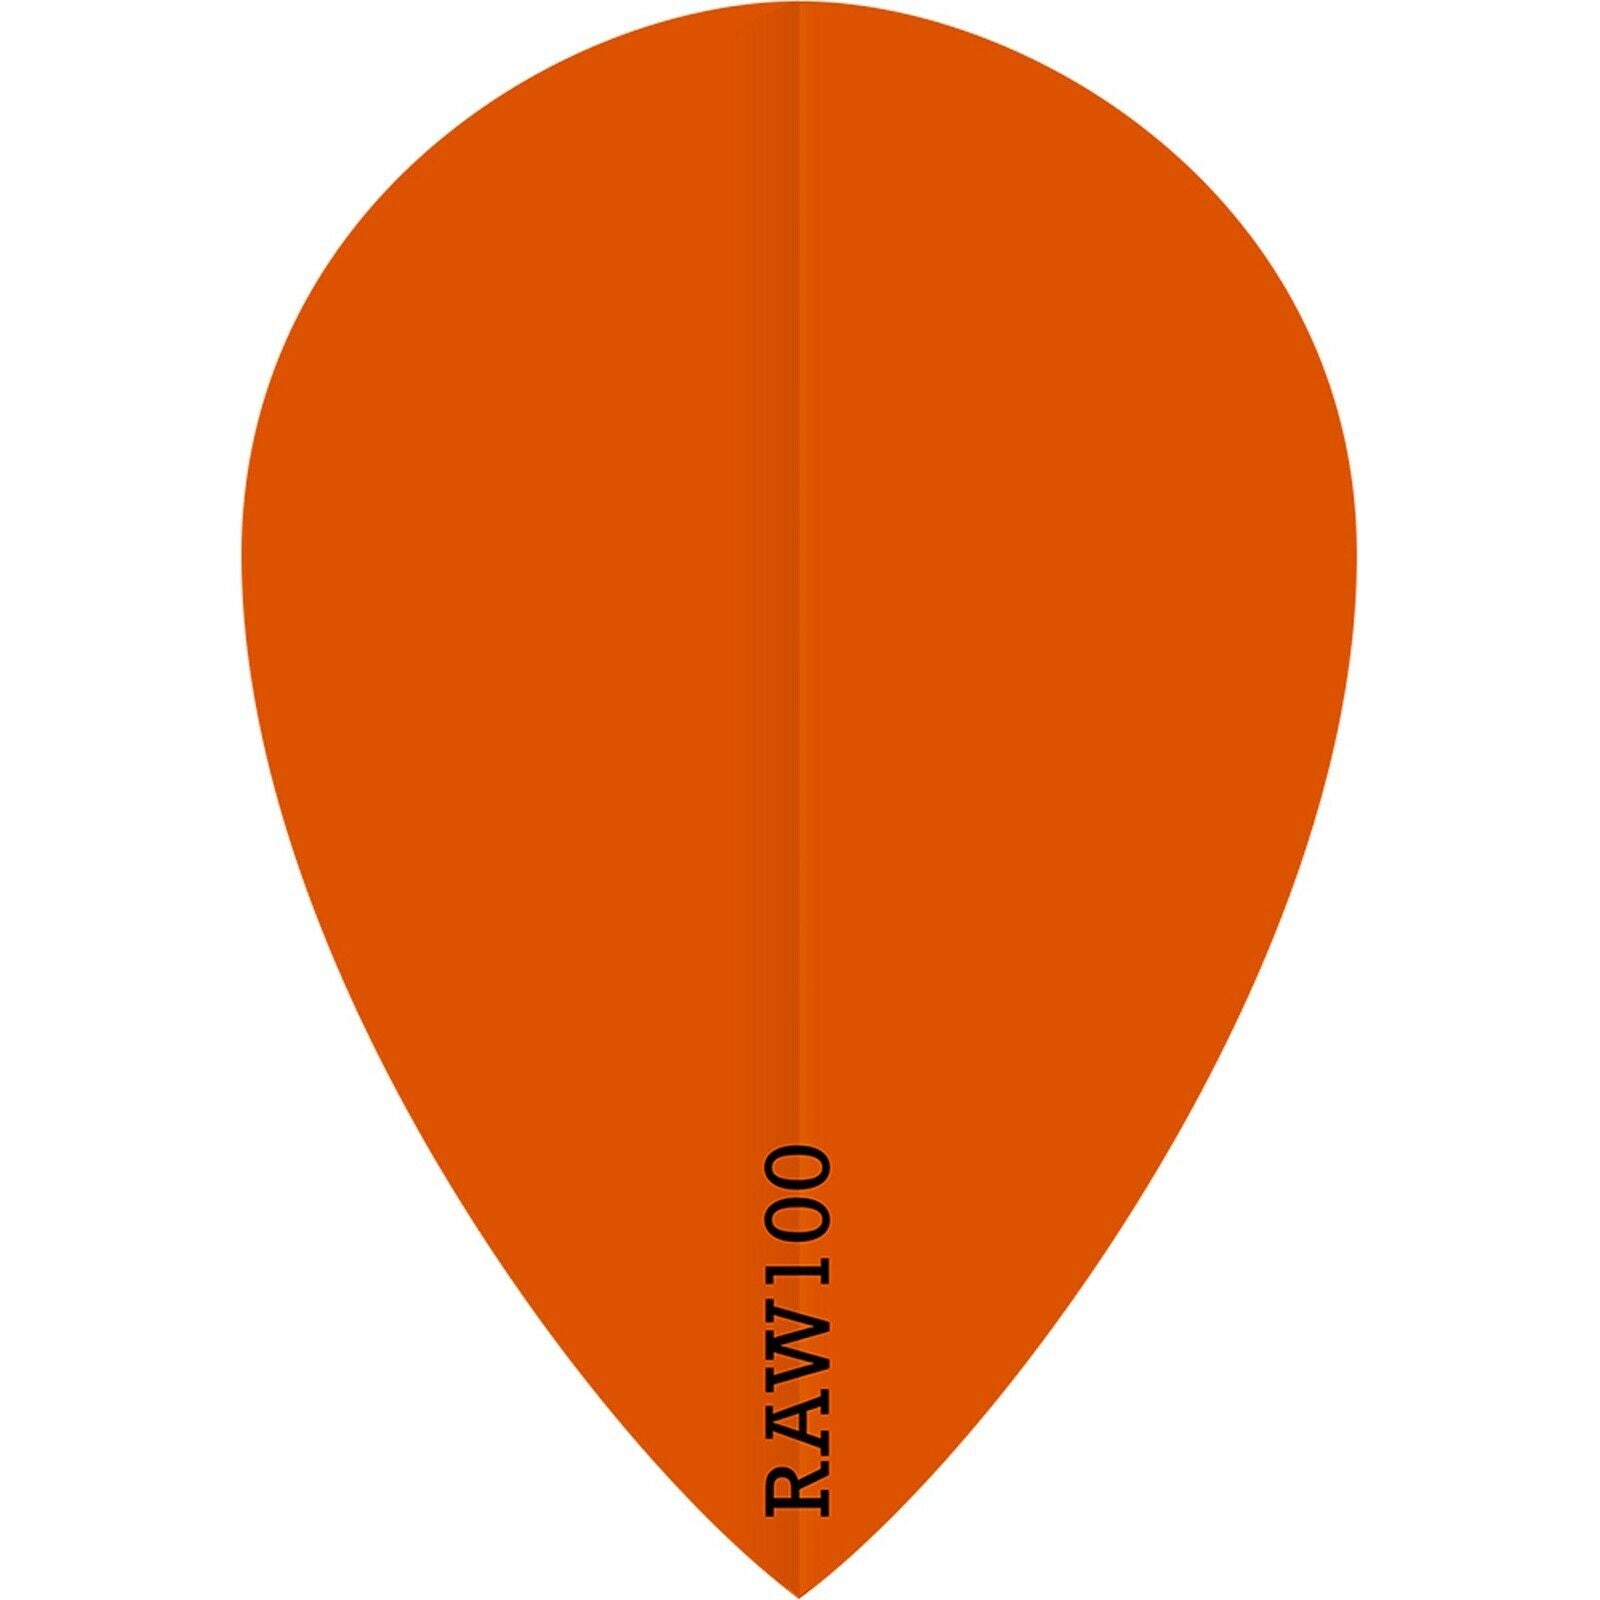 Raw 100 Plain Flights - Pear - 100 micron - Orange